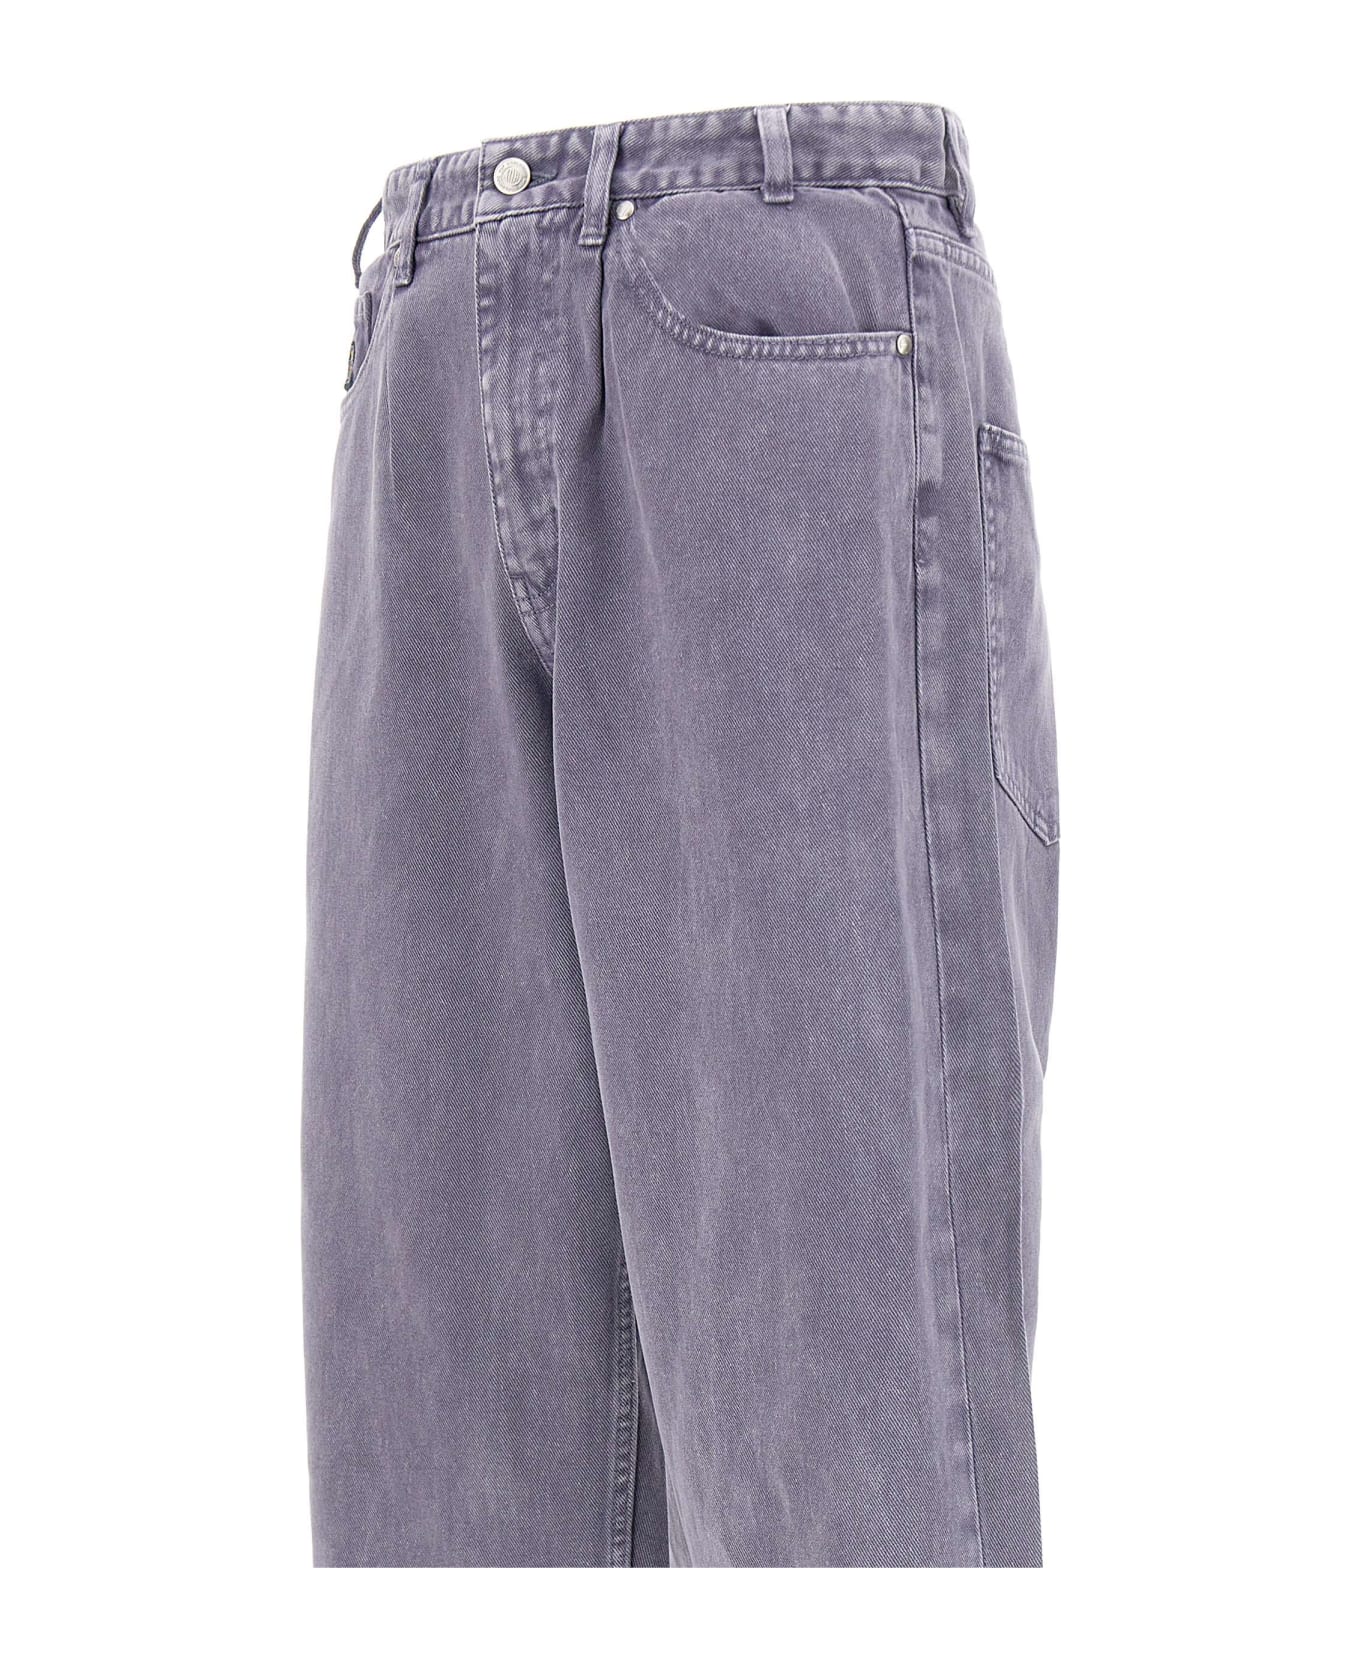 HUF 'cromer Washed Pant' Jeans - Grey デニム